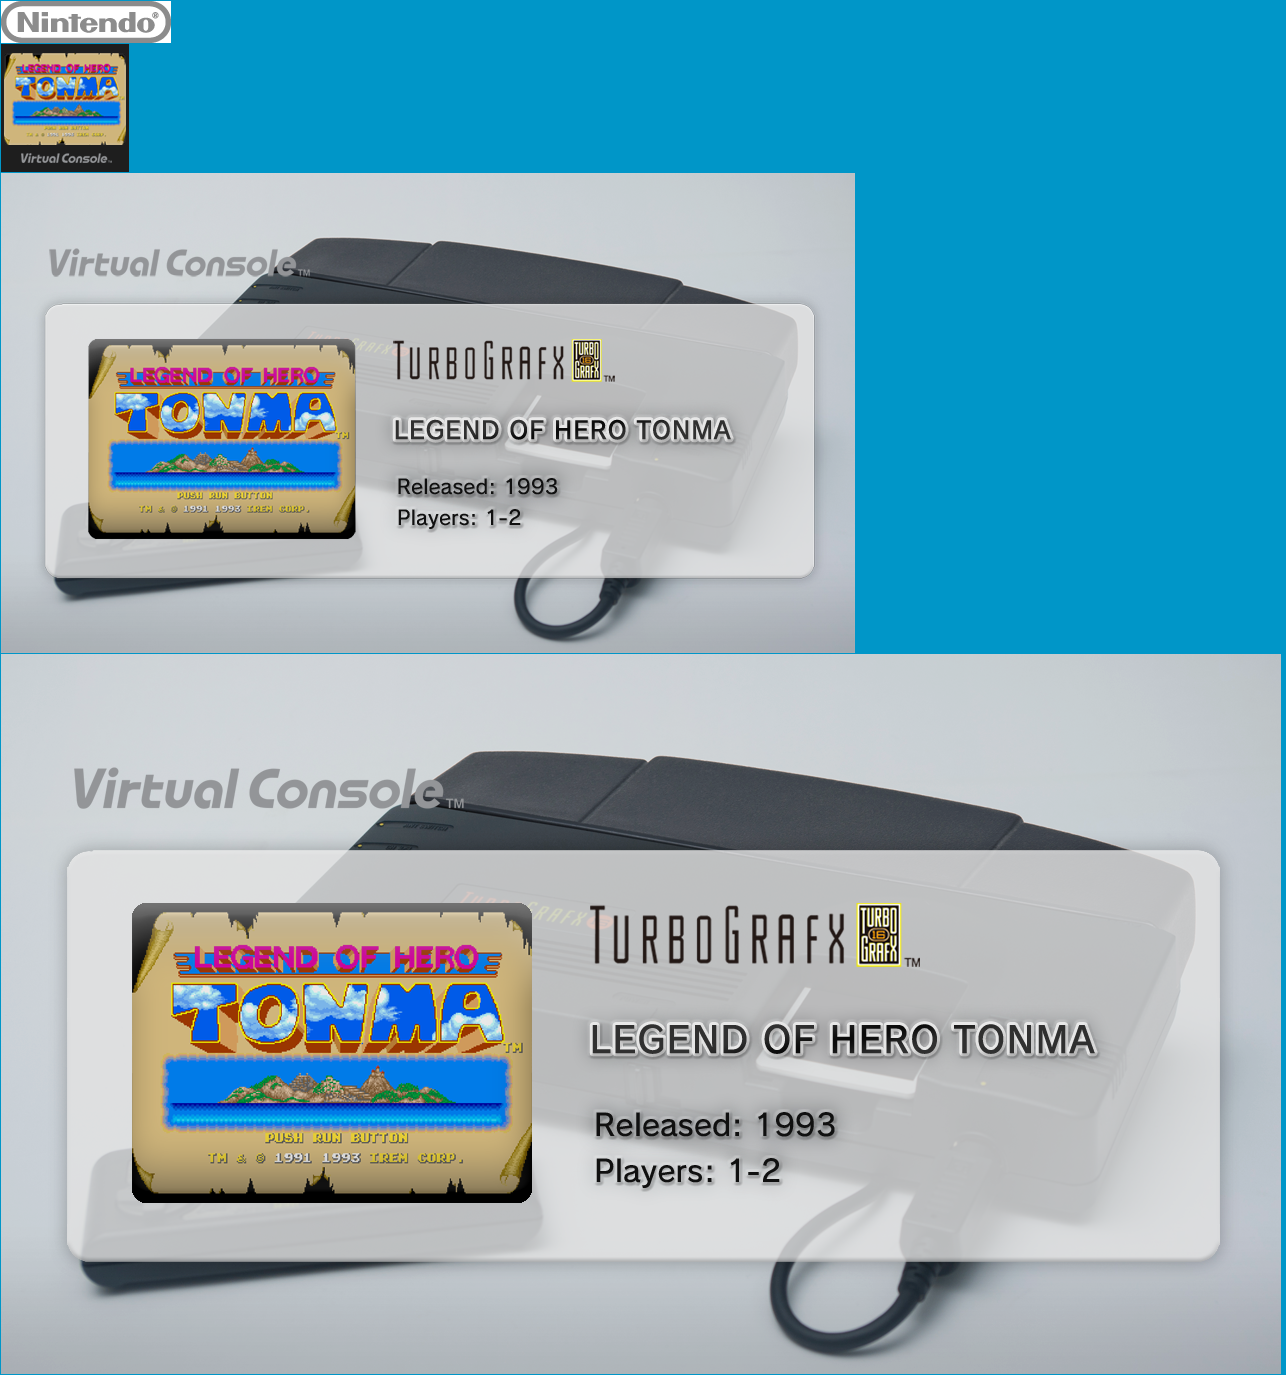 Virtual Console - LEGEND OF HERO TONMA